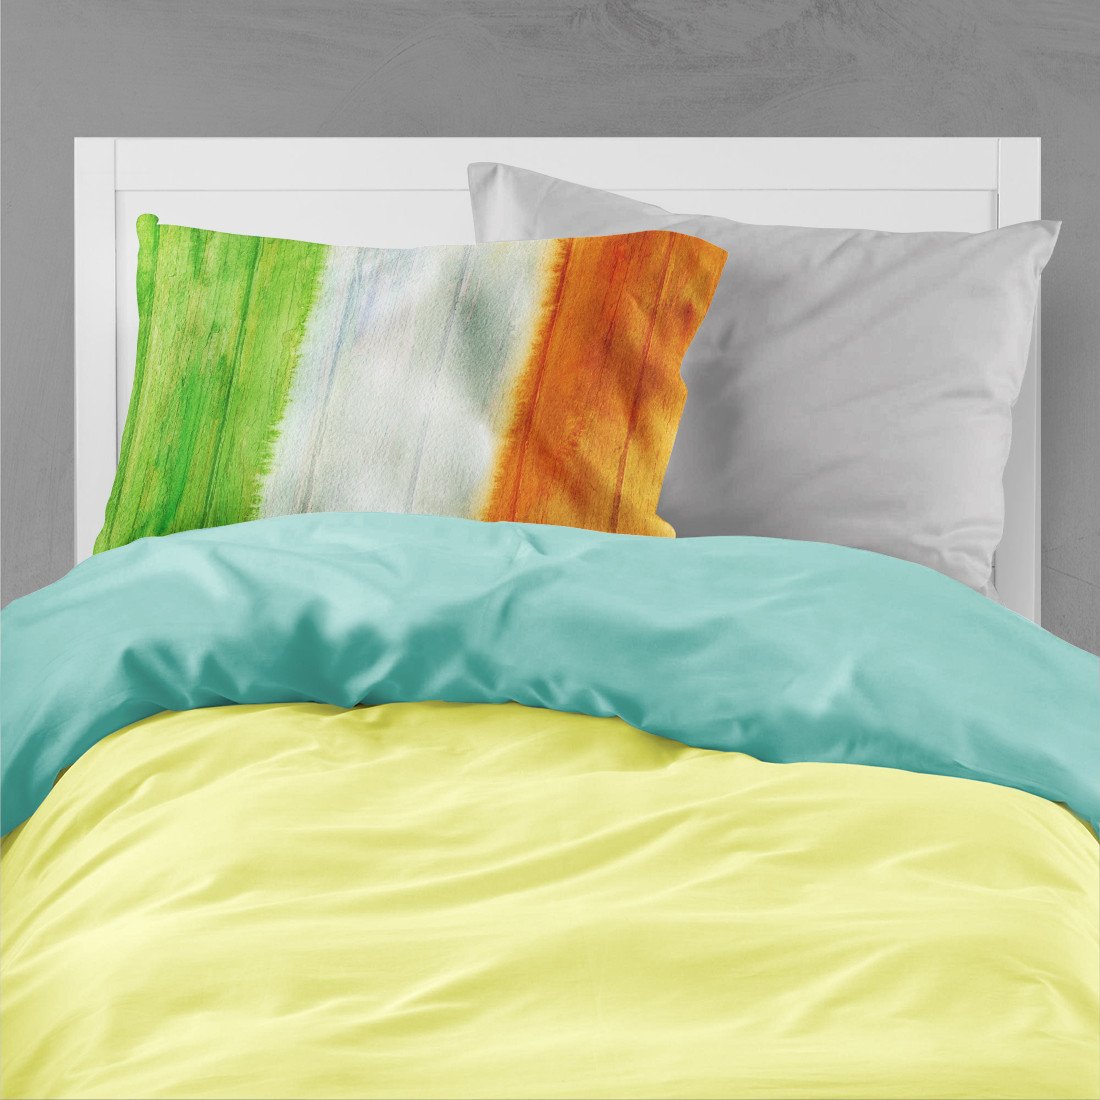 Irish Flag on Wood Fabric Standard Pillowcase BB5753PILLOWCASE by Caroline's Treasures